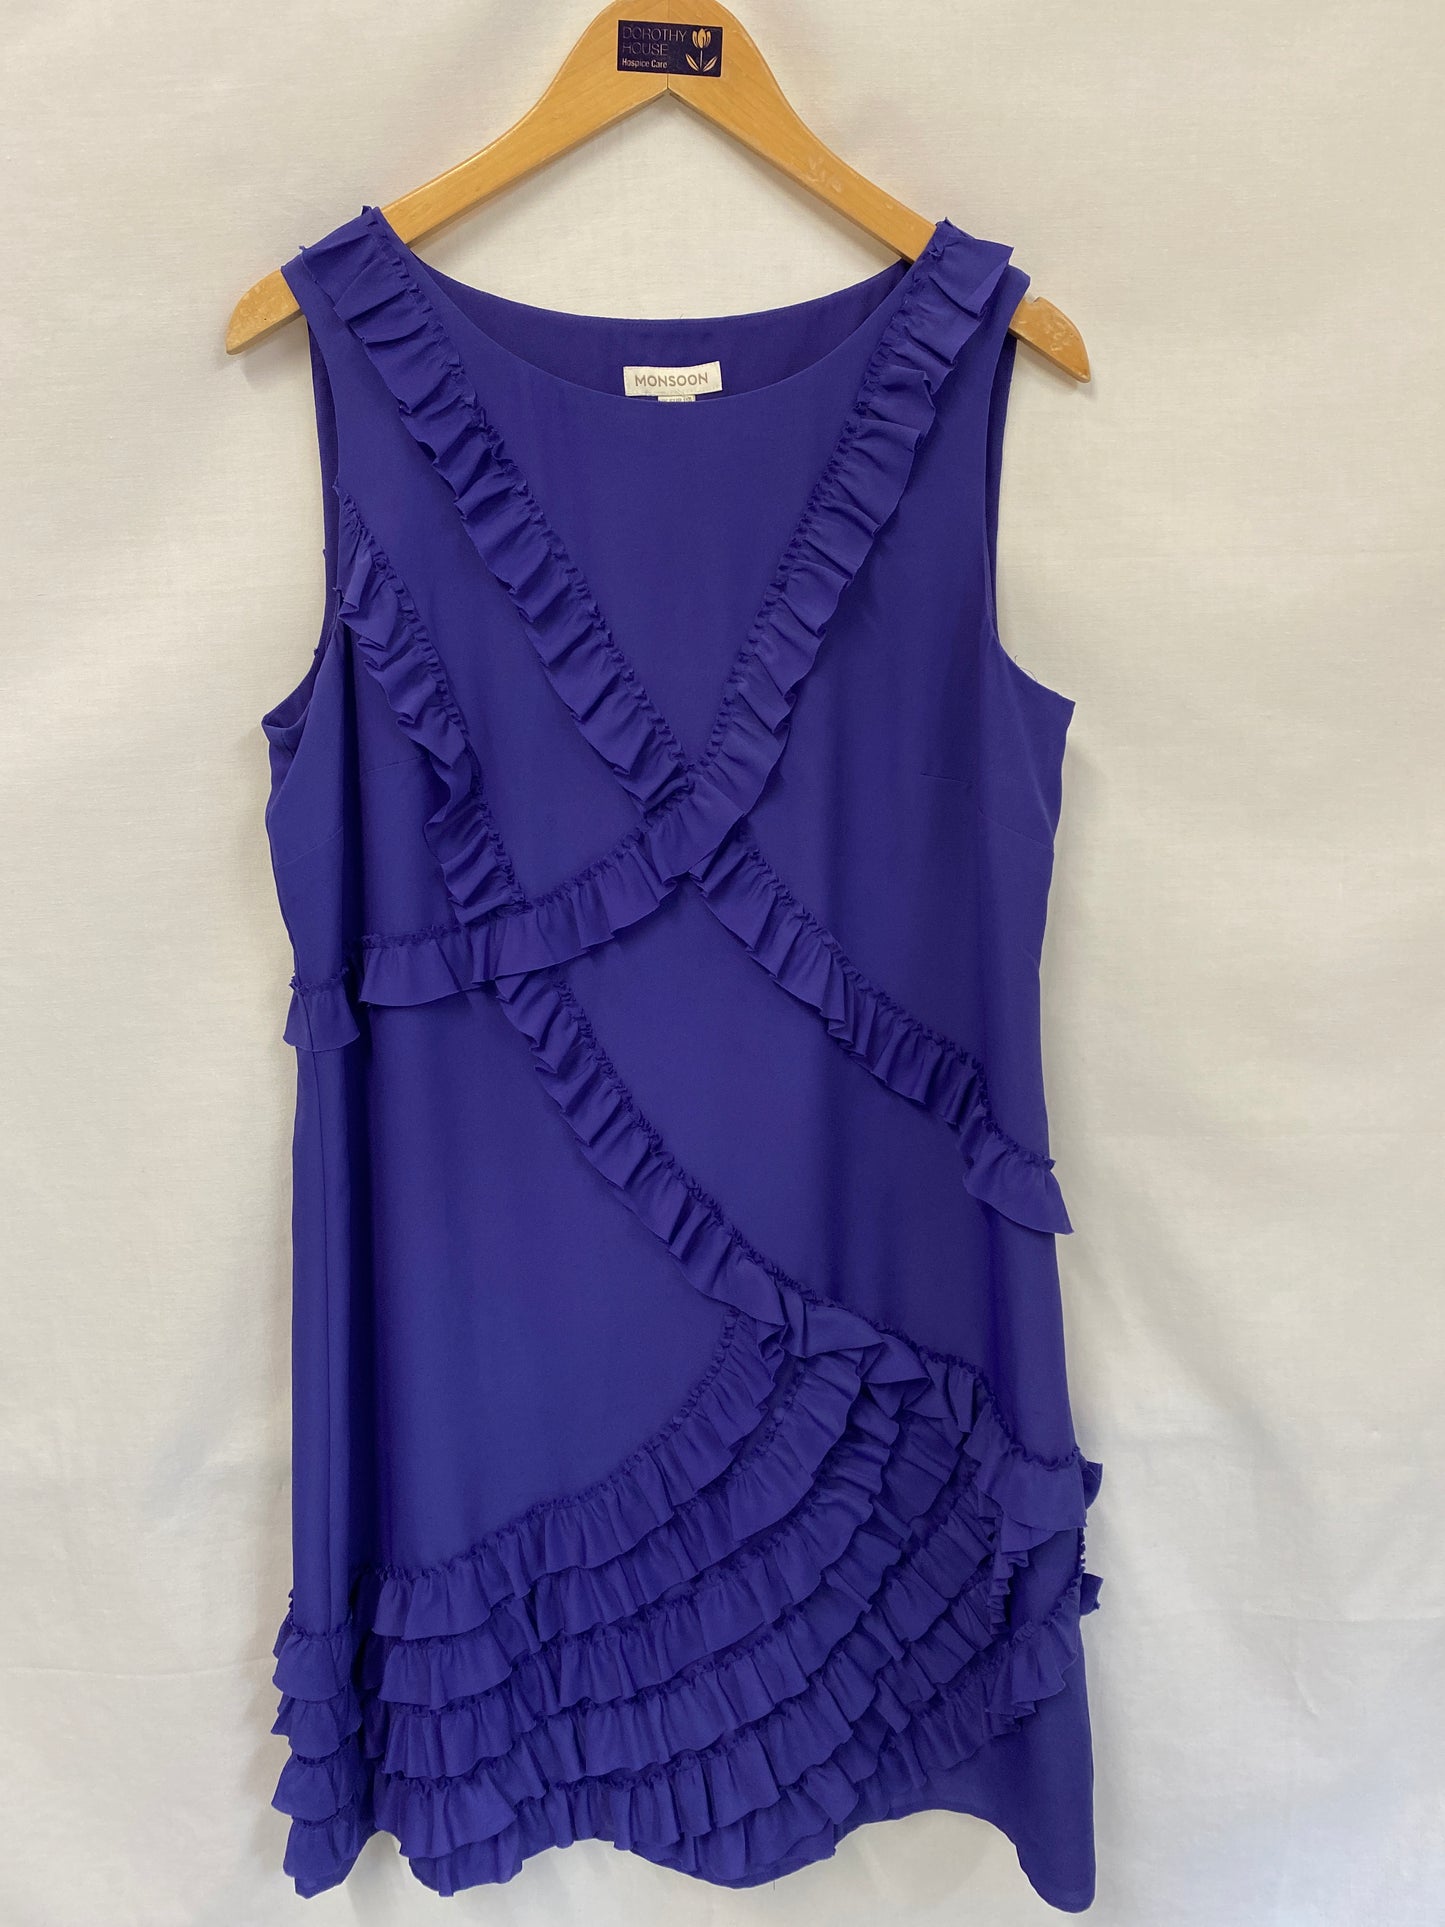 Purple Frill Detail Sleeveless Dress Size 16